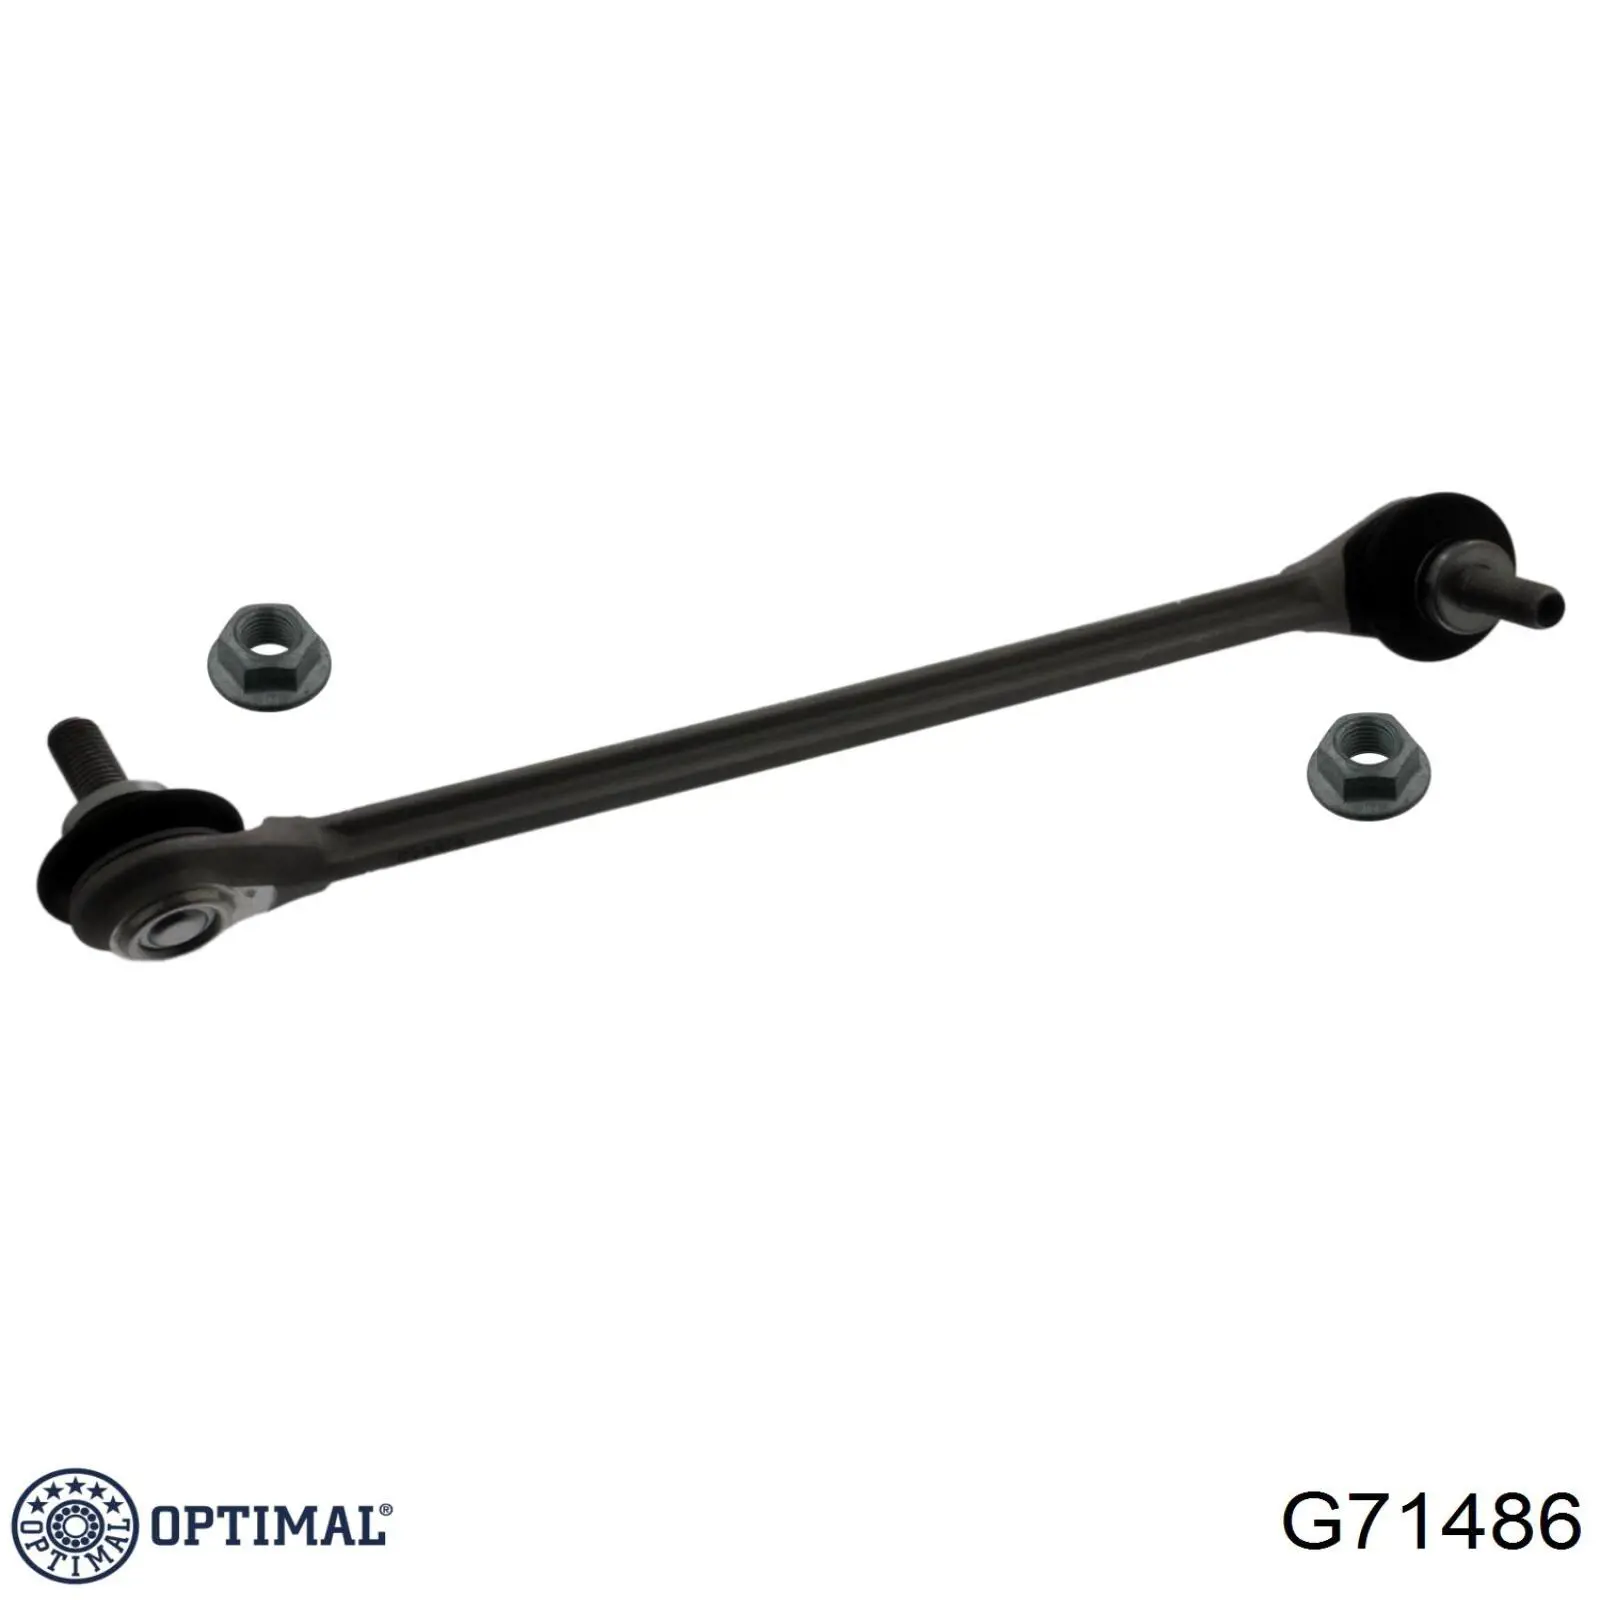 G71486 Optimal barra estabilizadora delantera derecha